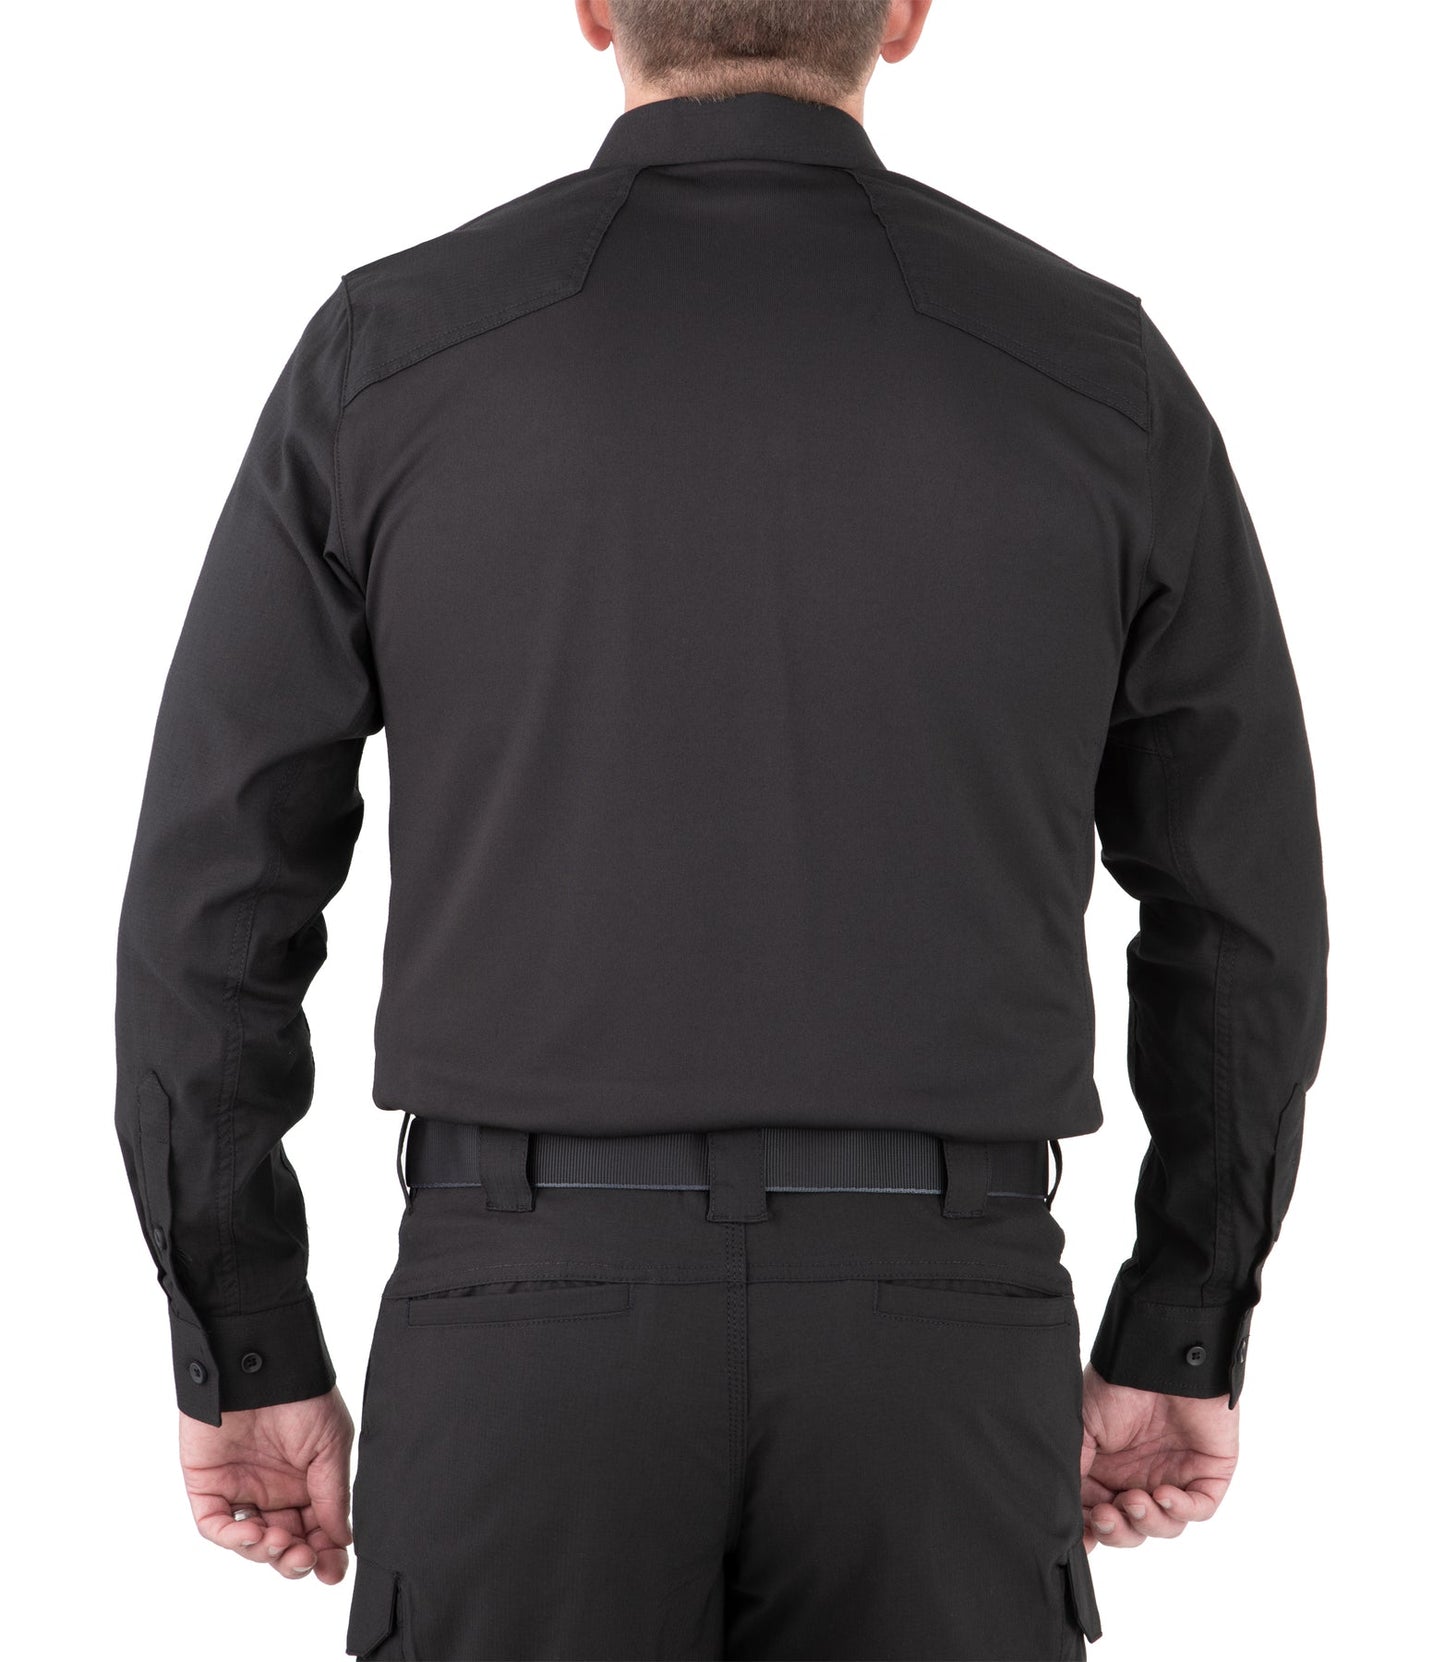 V2 Pro Performance Long Sleeve Shirt